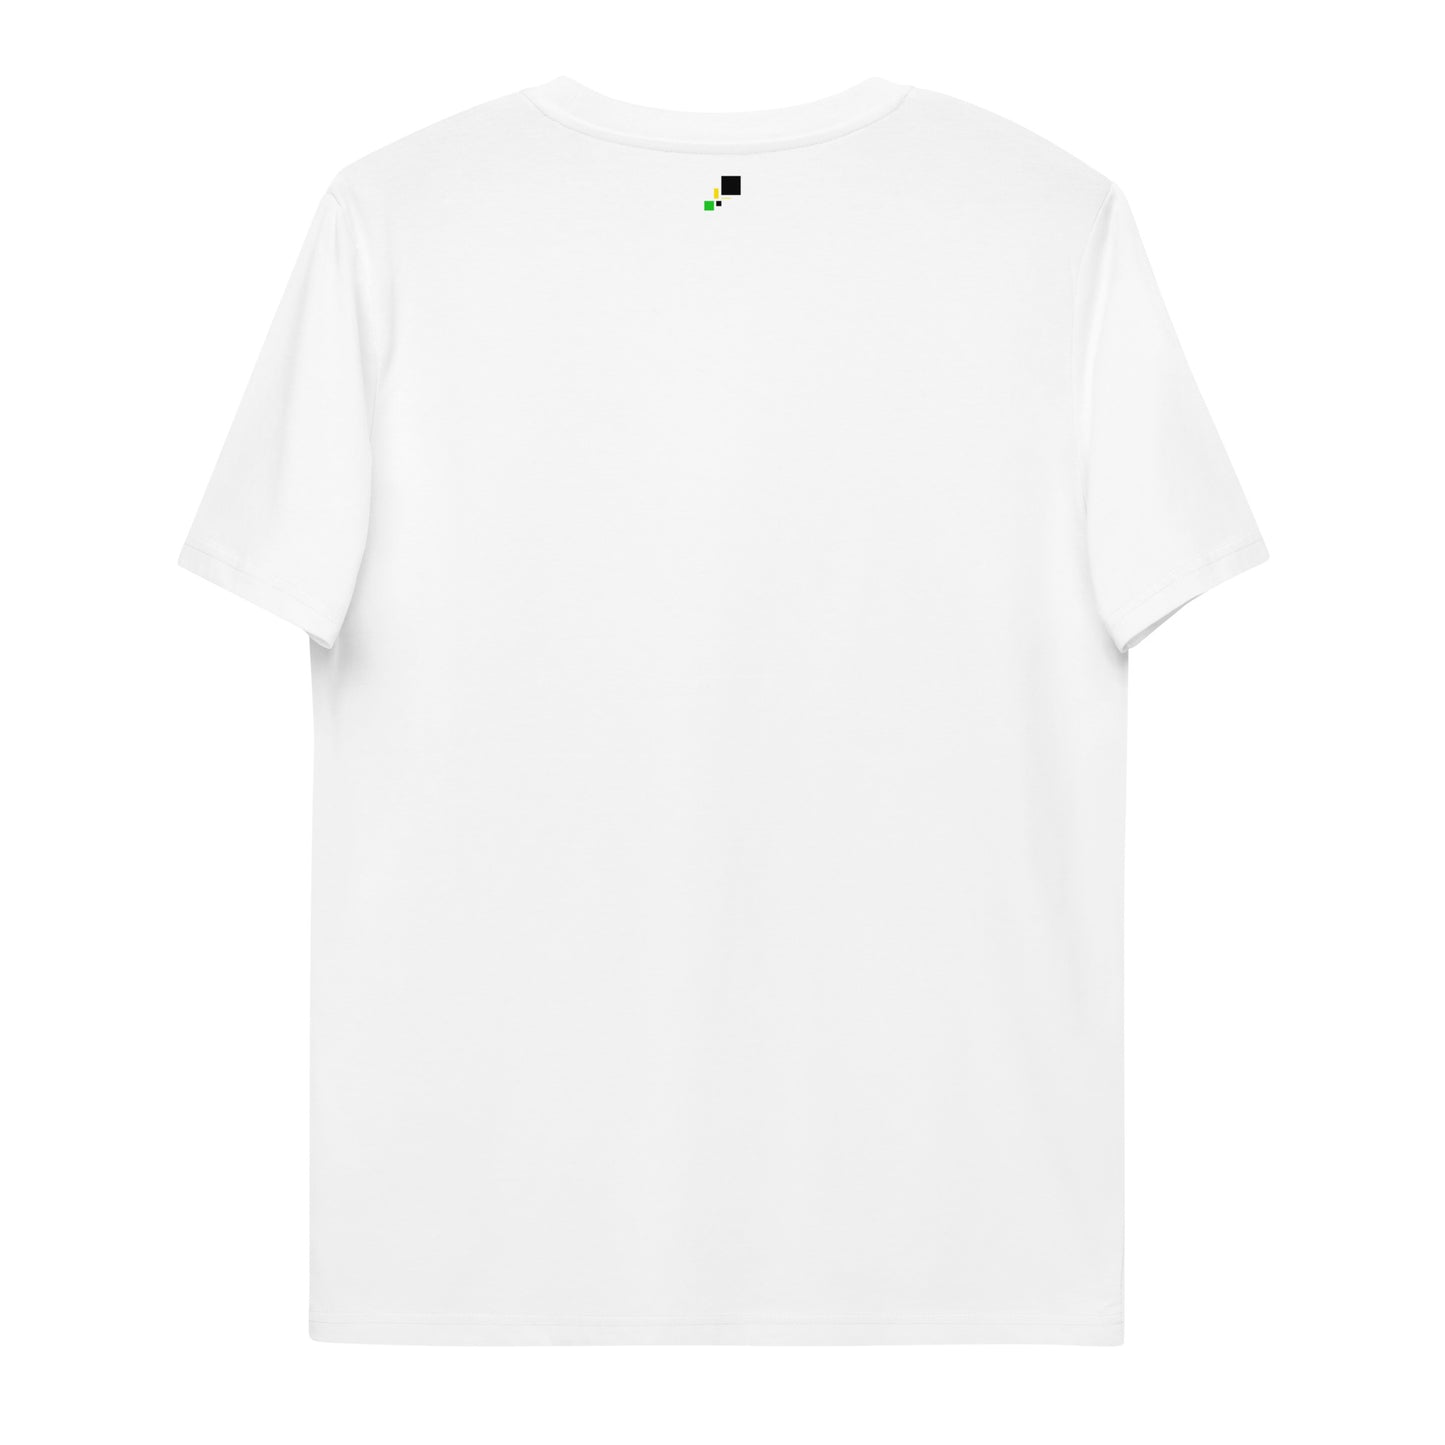 Be first low profile - Camiseta de algodón orgánico unisex